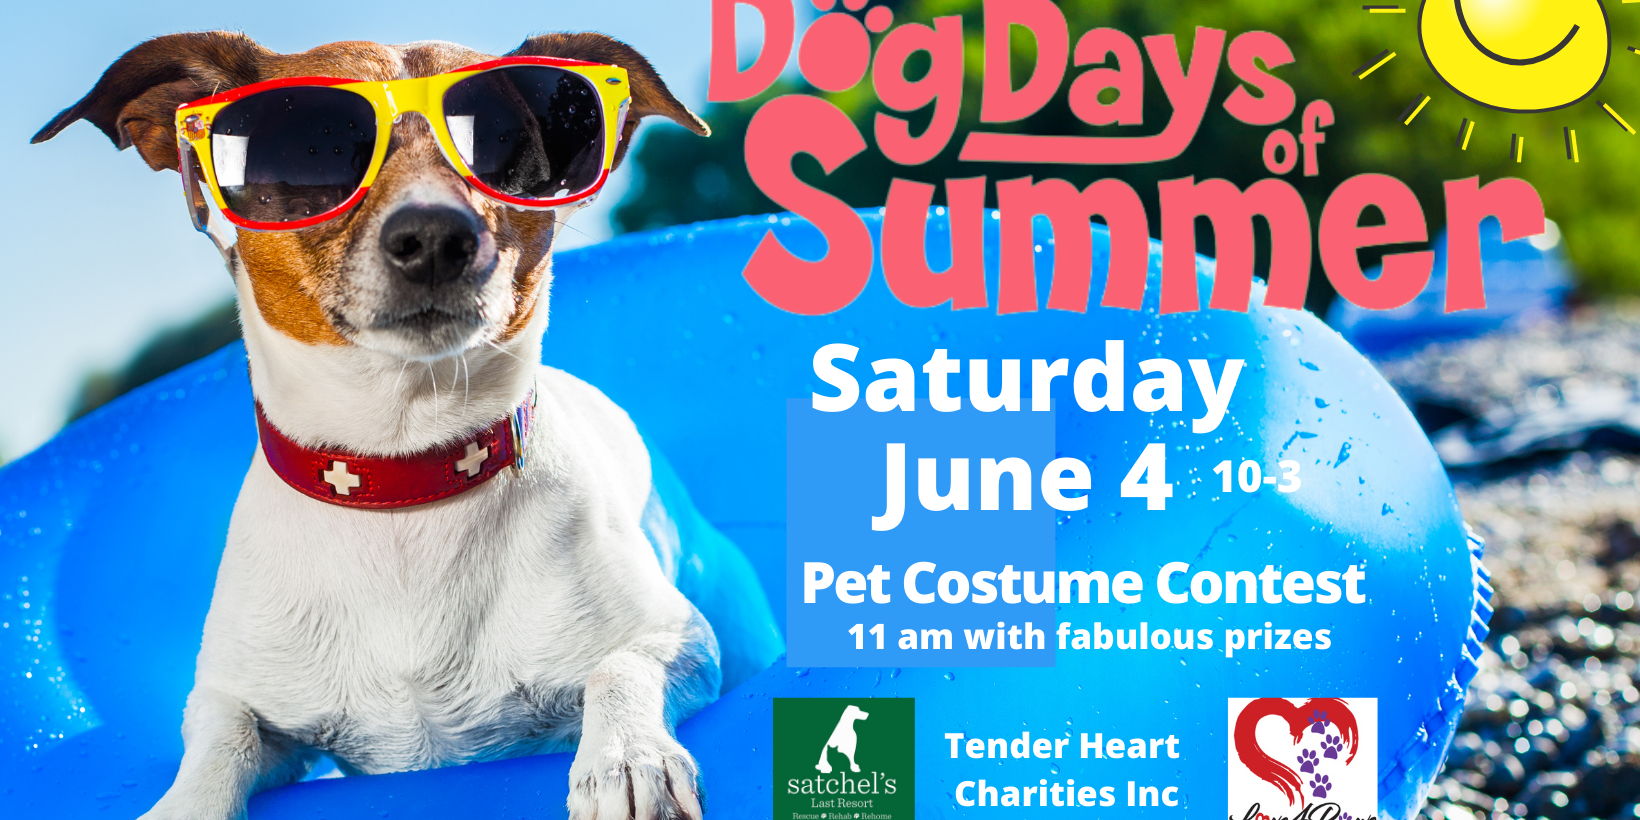 Dog Days of Summer promotional image